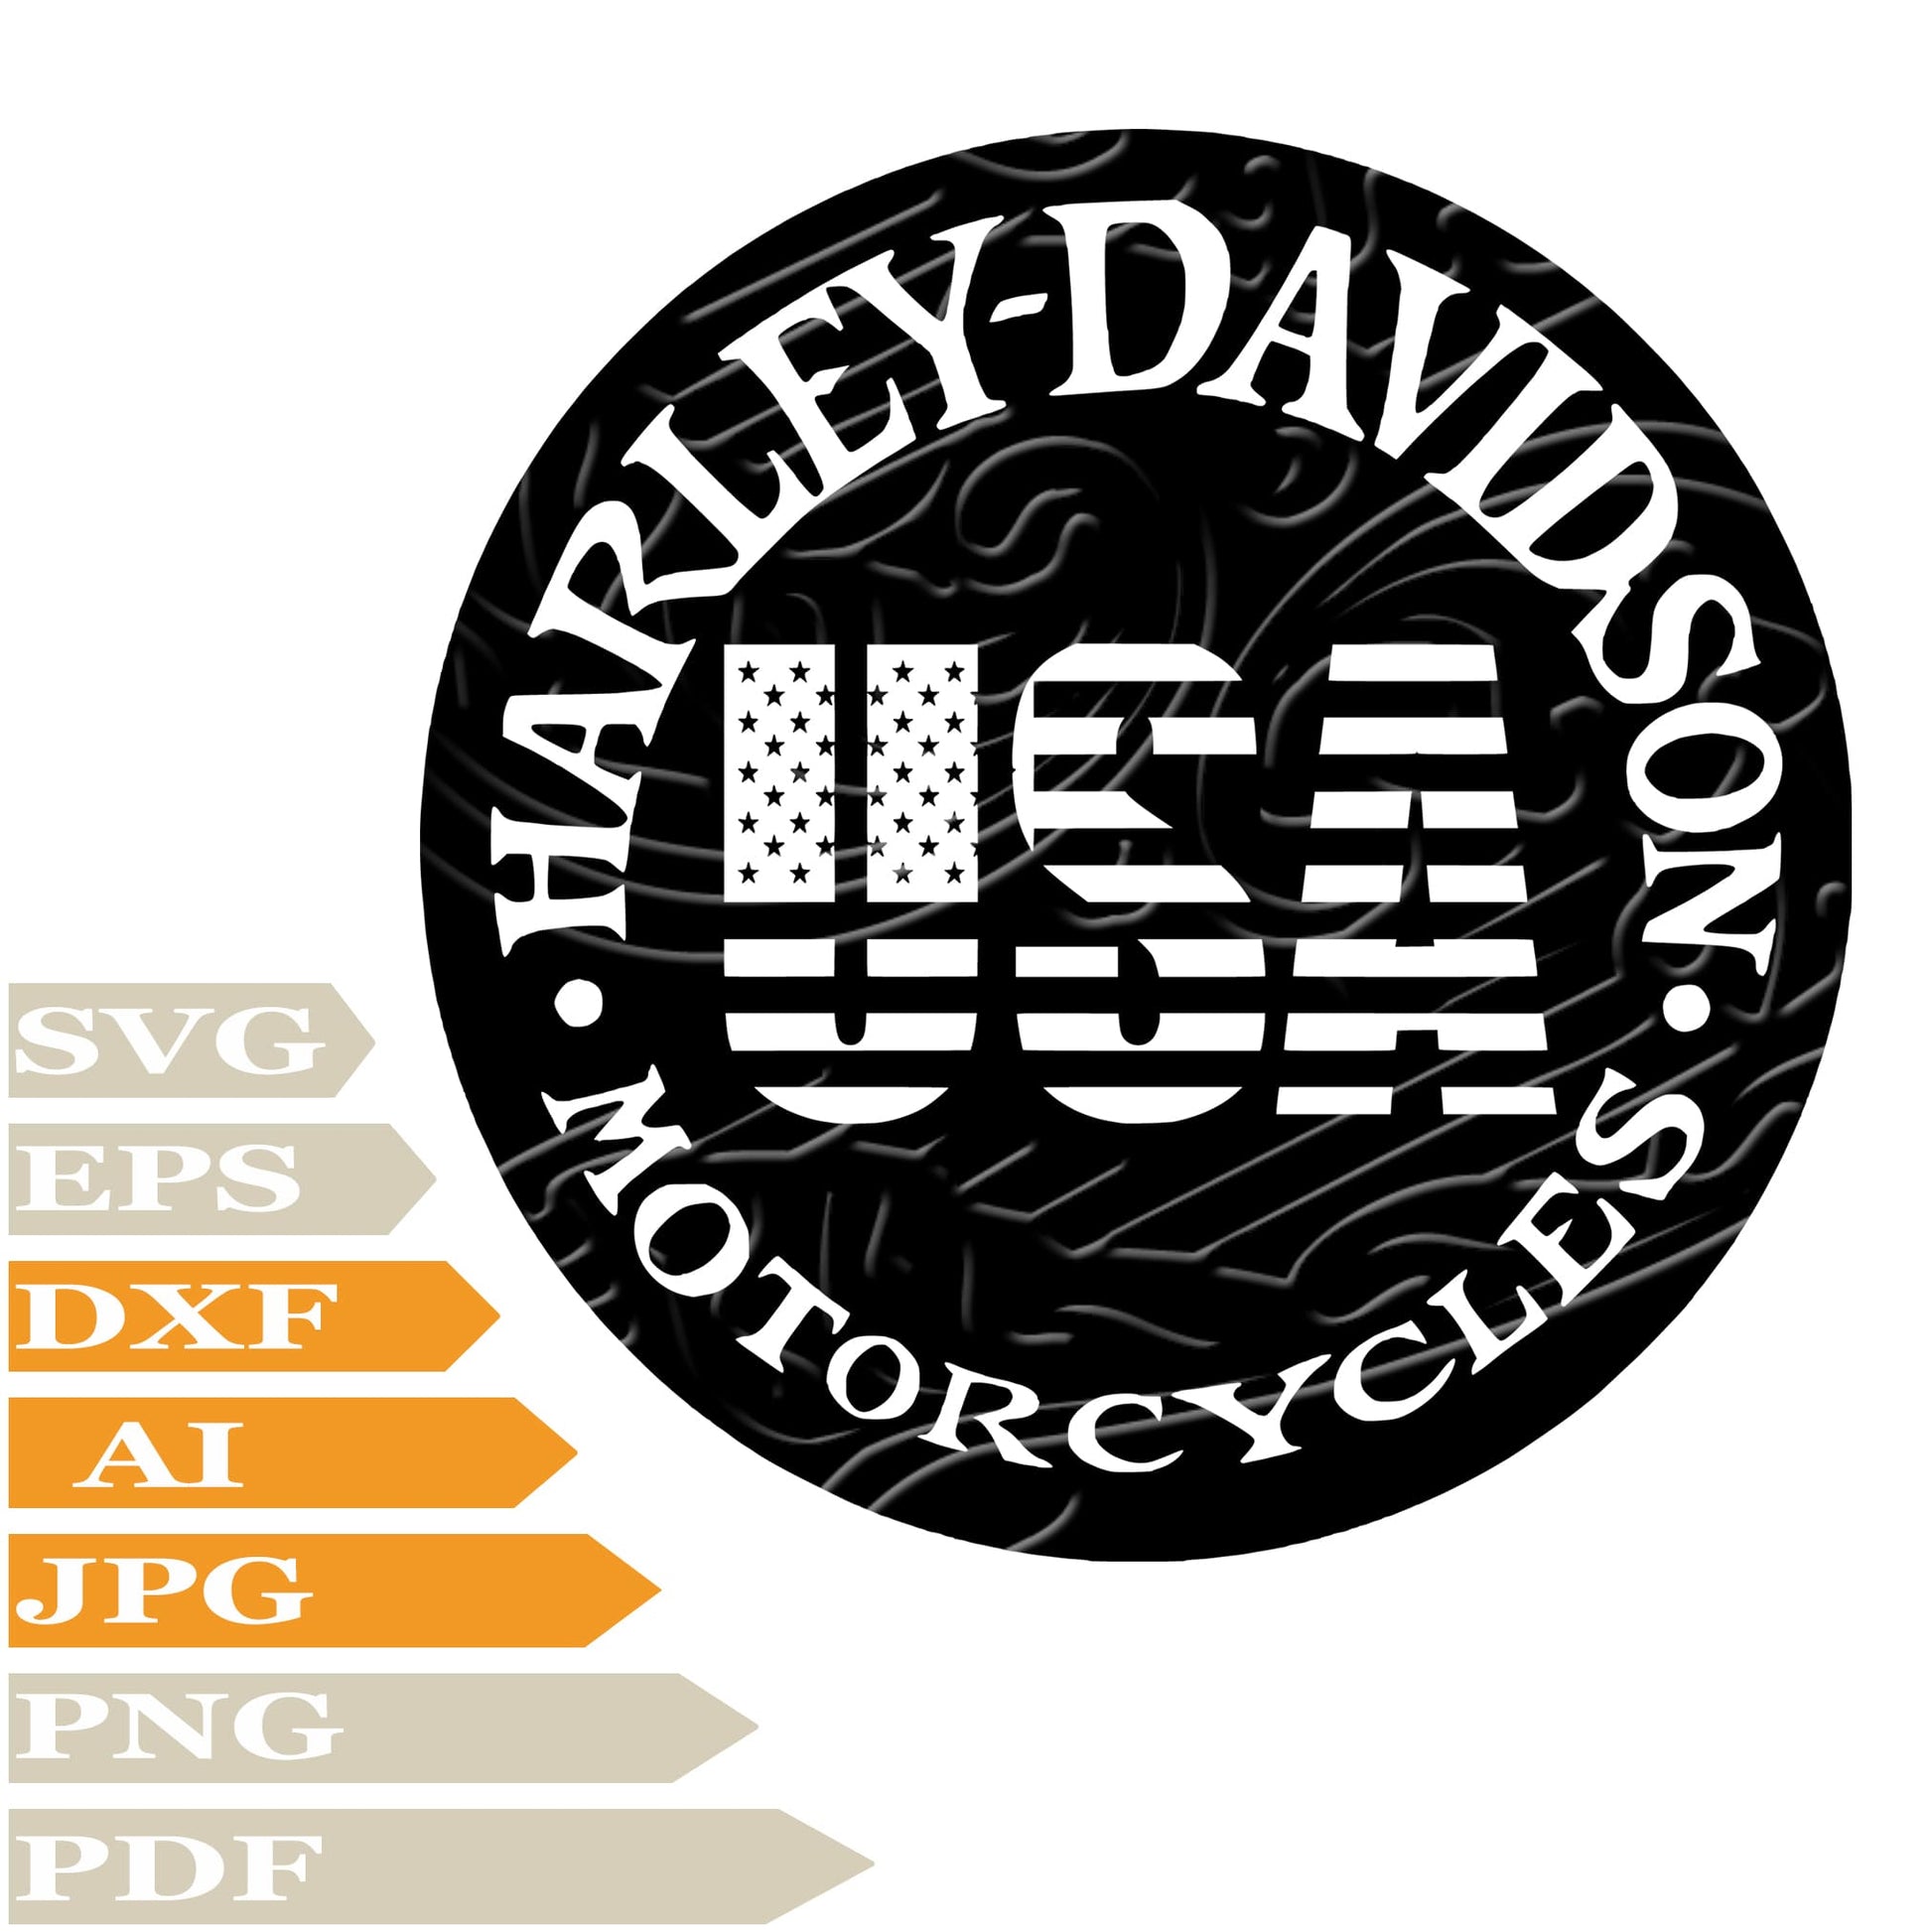 Usa Harley Davidson, Harley Davidson Logo Svg File, Image Cut, Png, For Tattoo, Silhouette, Digital Vector Download, Cut File, Clipart, For Cricut